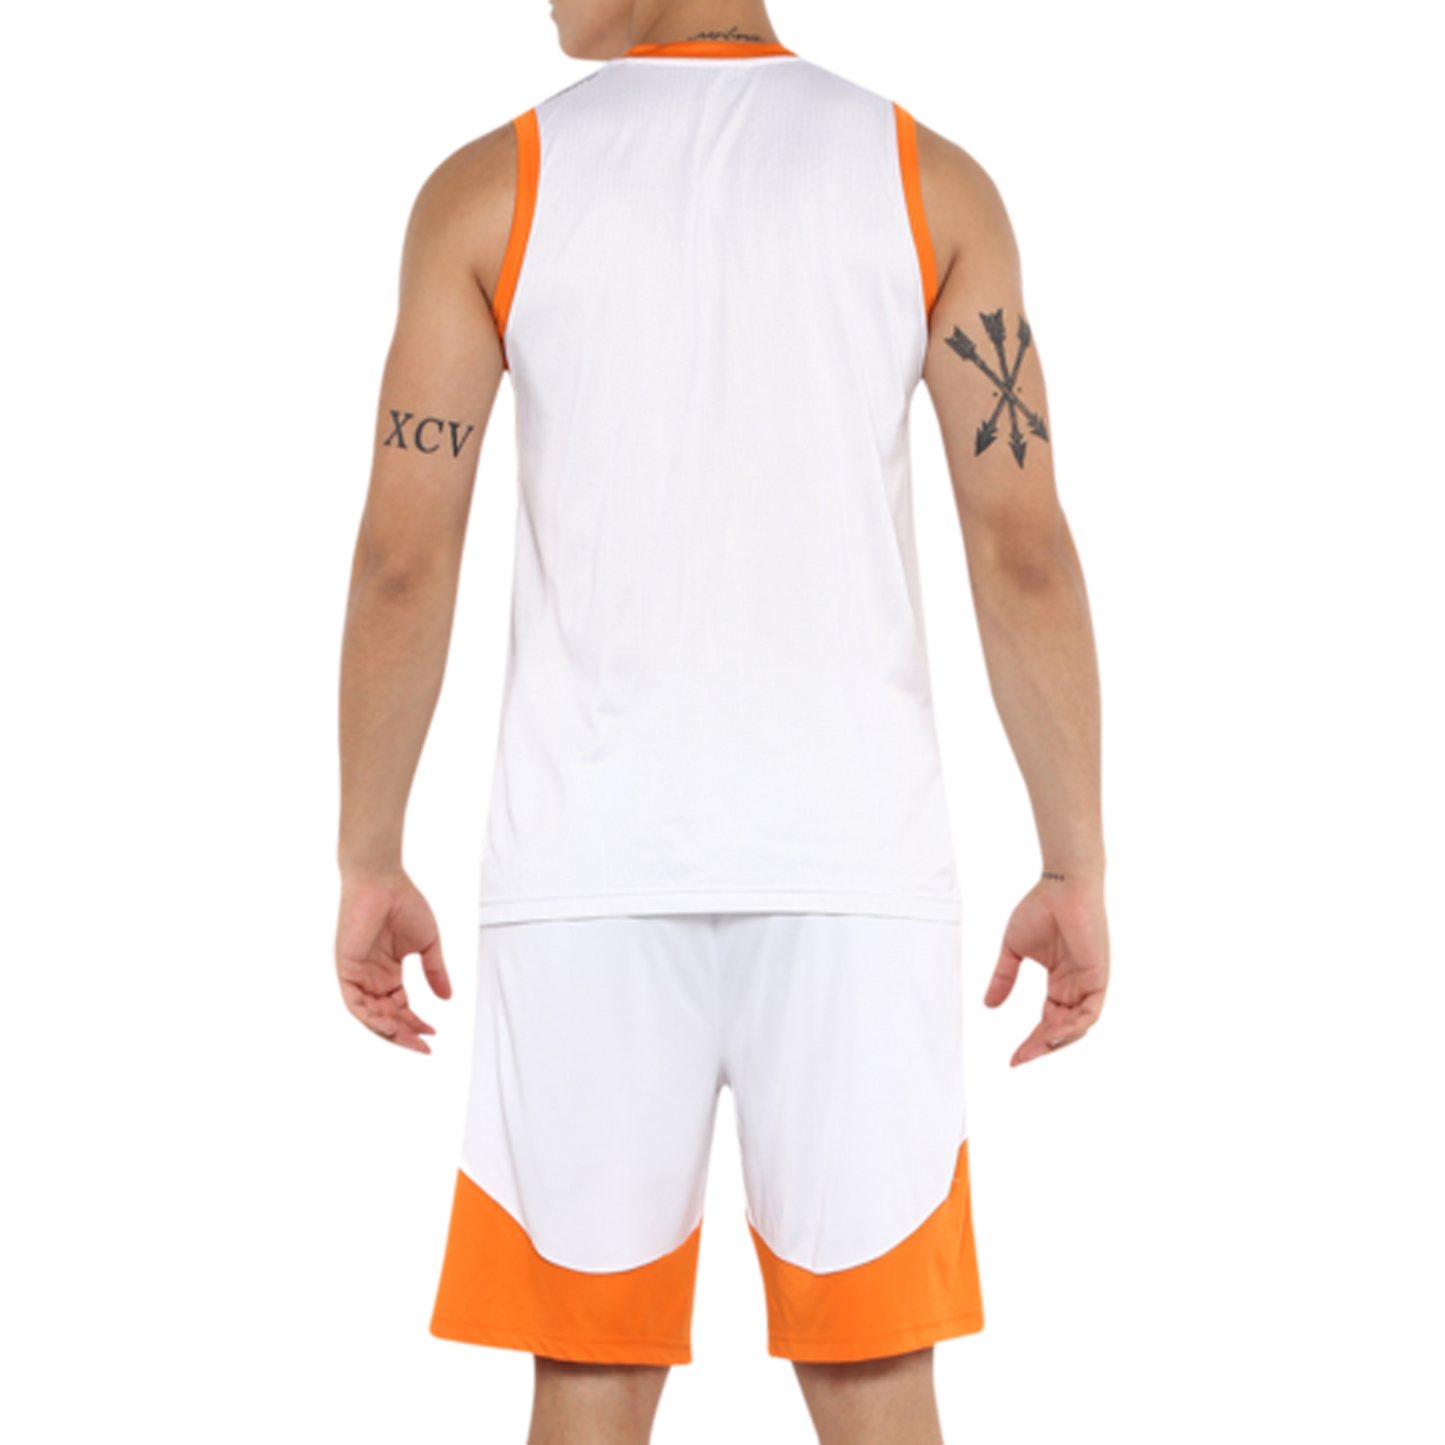 Nivia2103 Phantom Jersey Set for Men, White/Orange - Best Price online Prokicksports.com